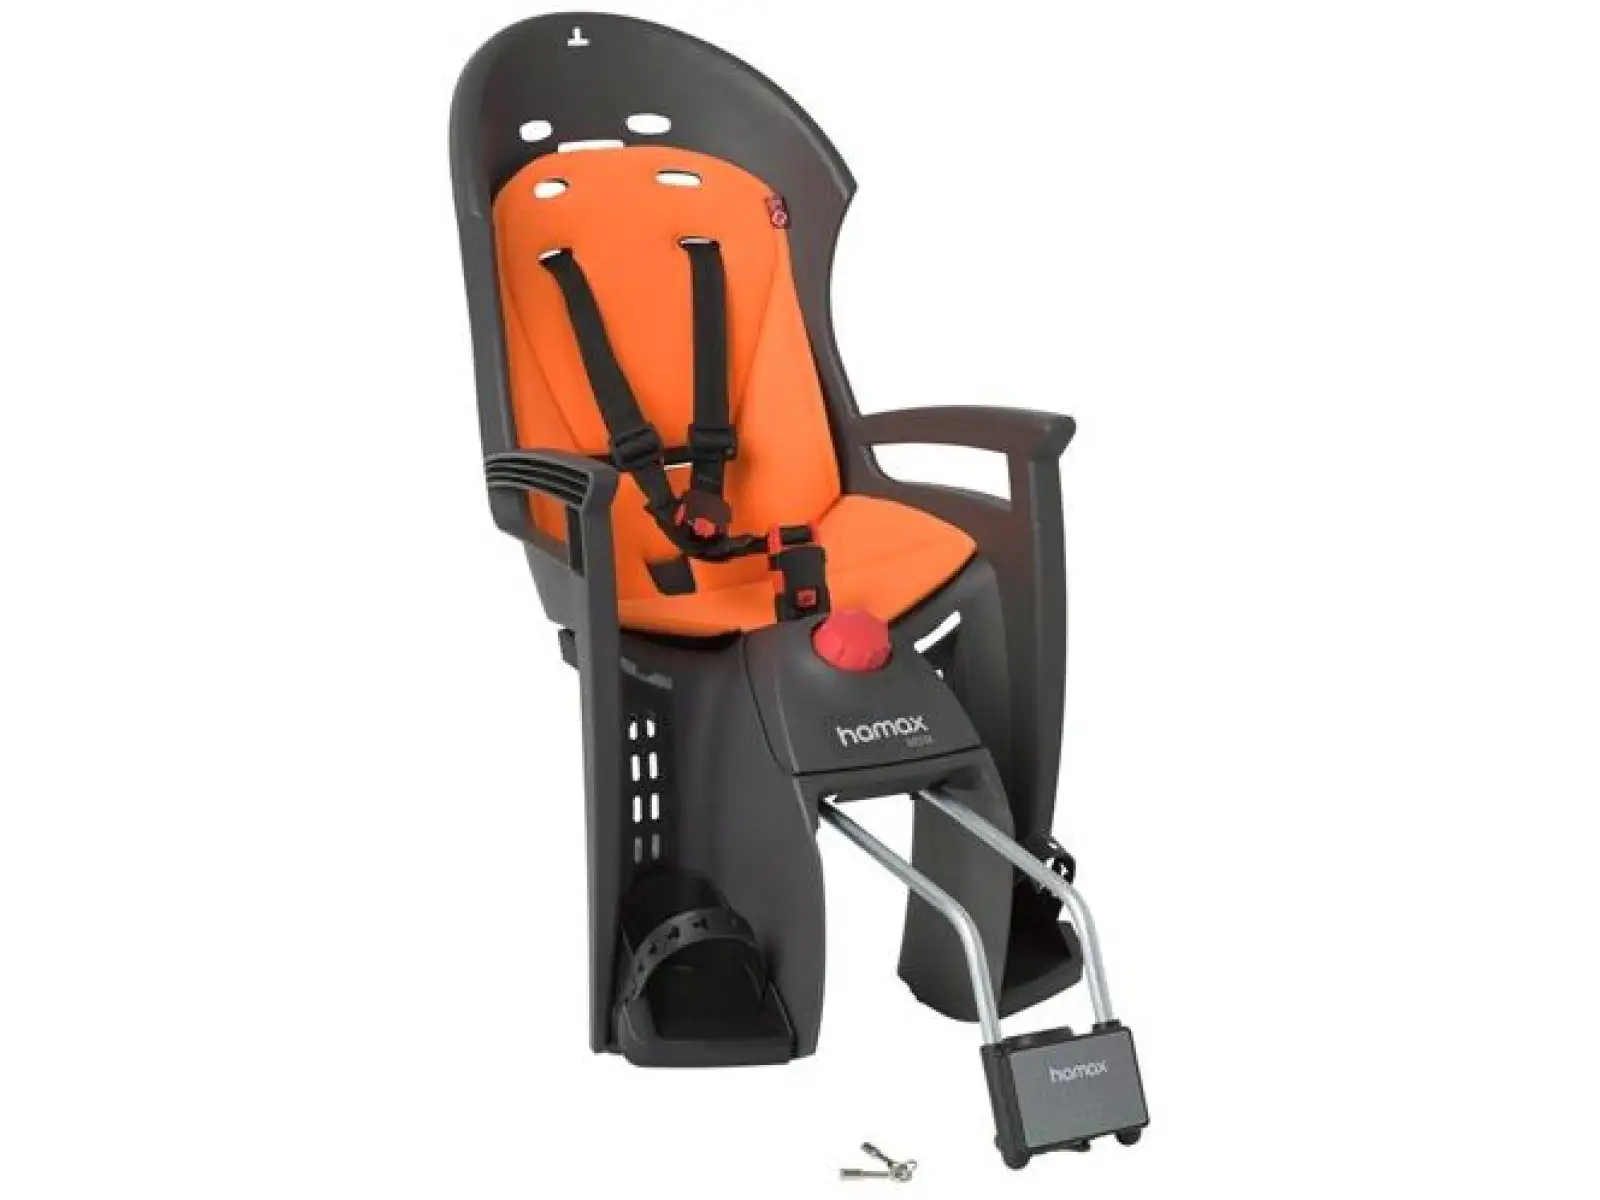 Detská sedačka Hamax Siesta tmavo sivá/oranžová